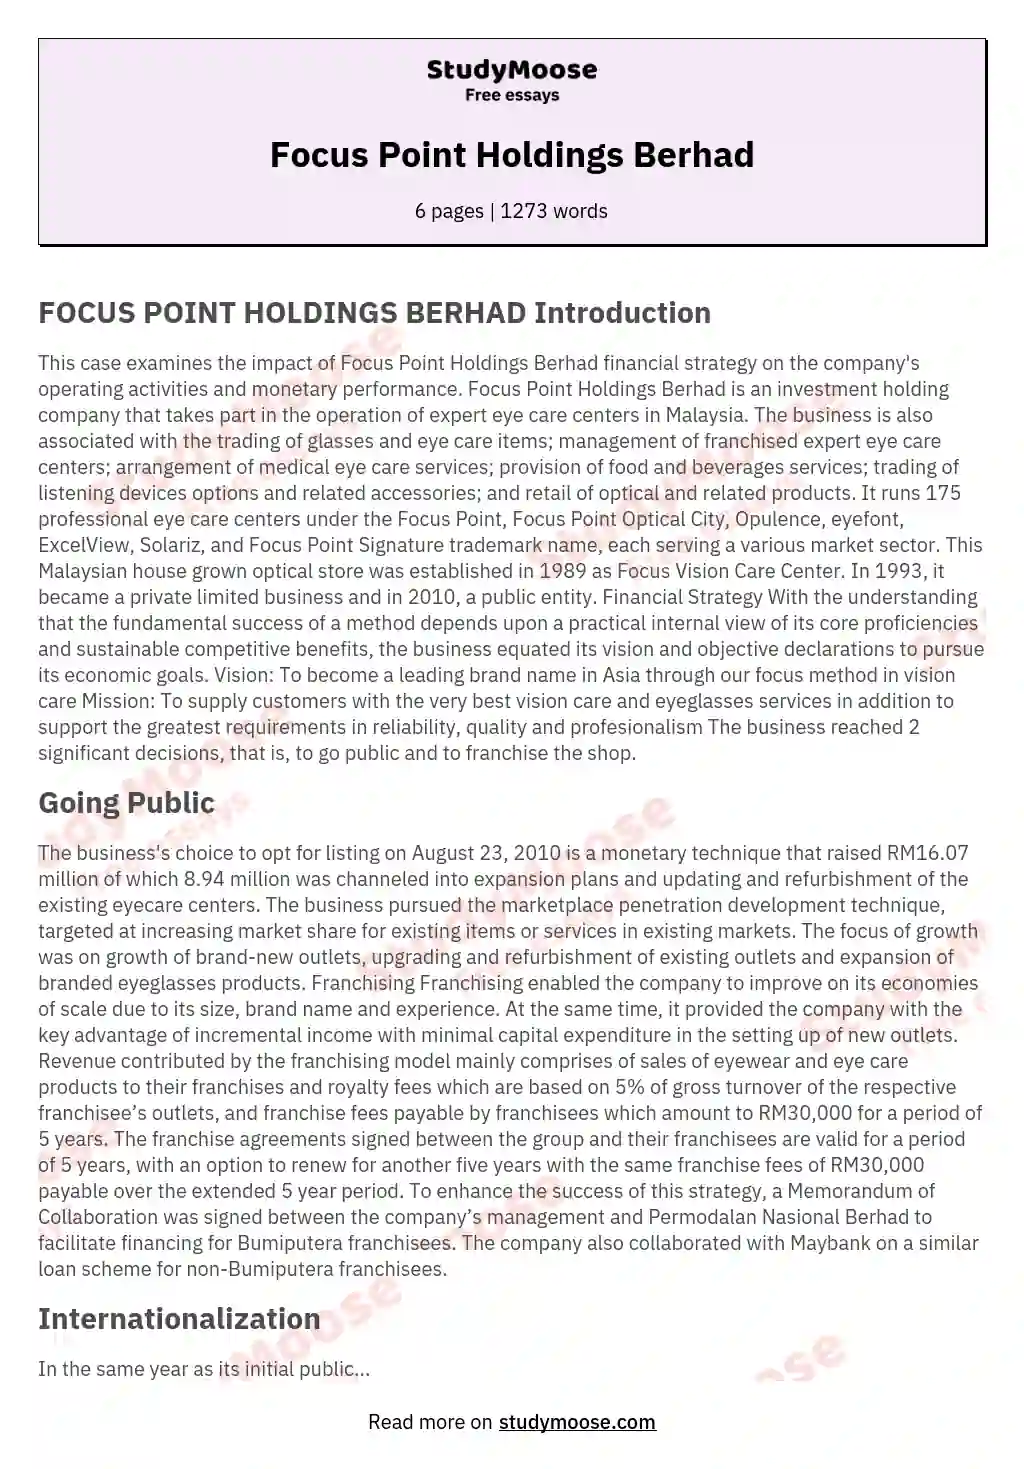 Focus Point Holdings Berhad essay